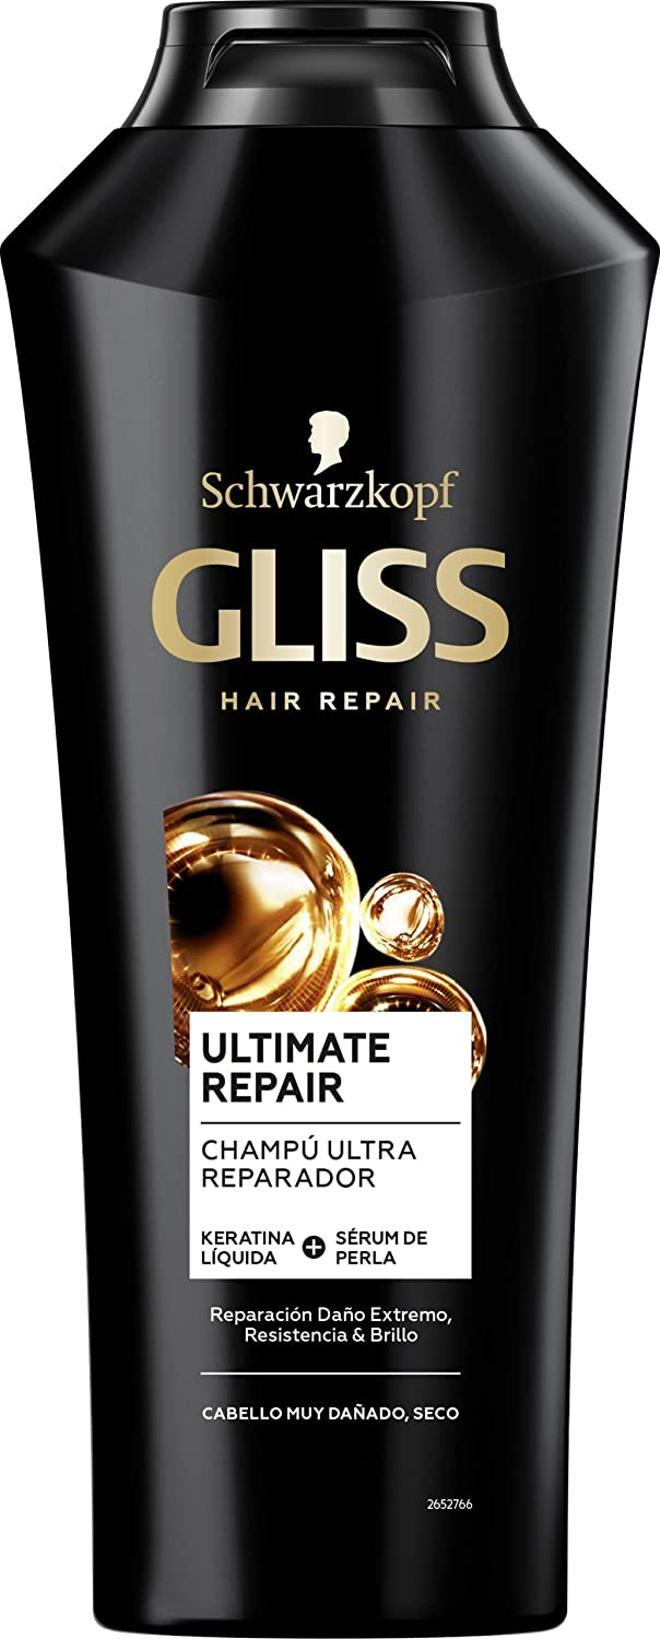 Gliss Ultimate Repair de Schwarzkopf